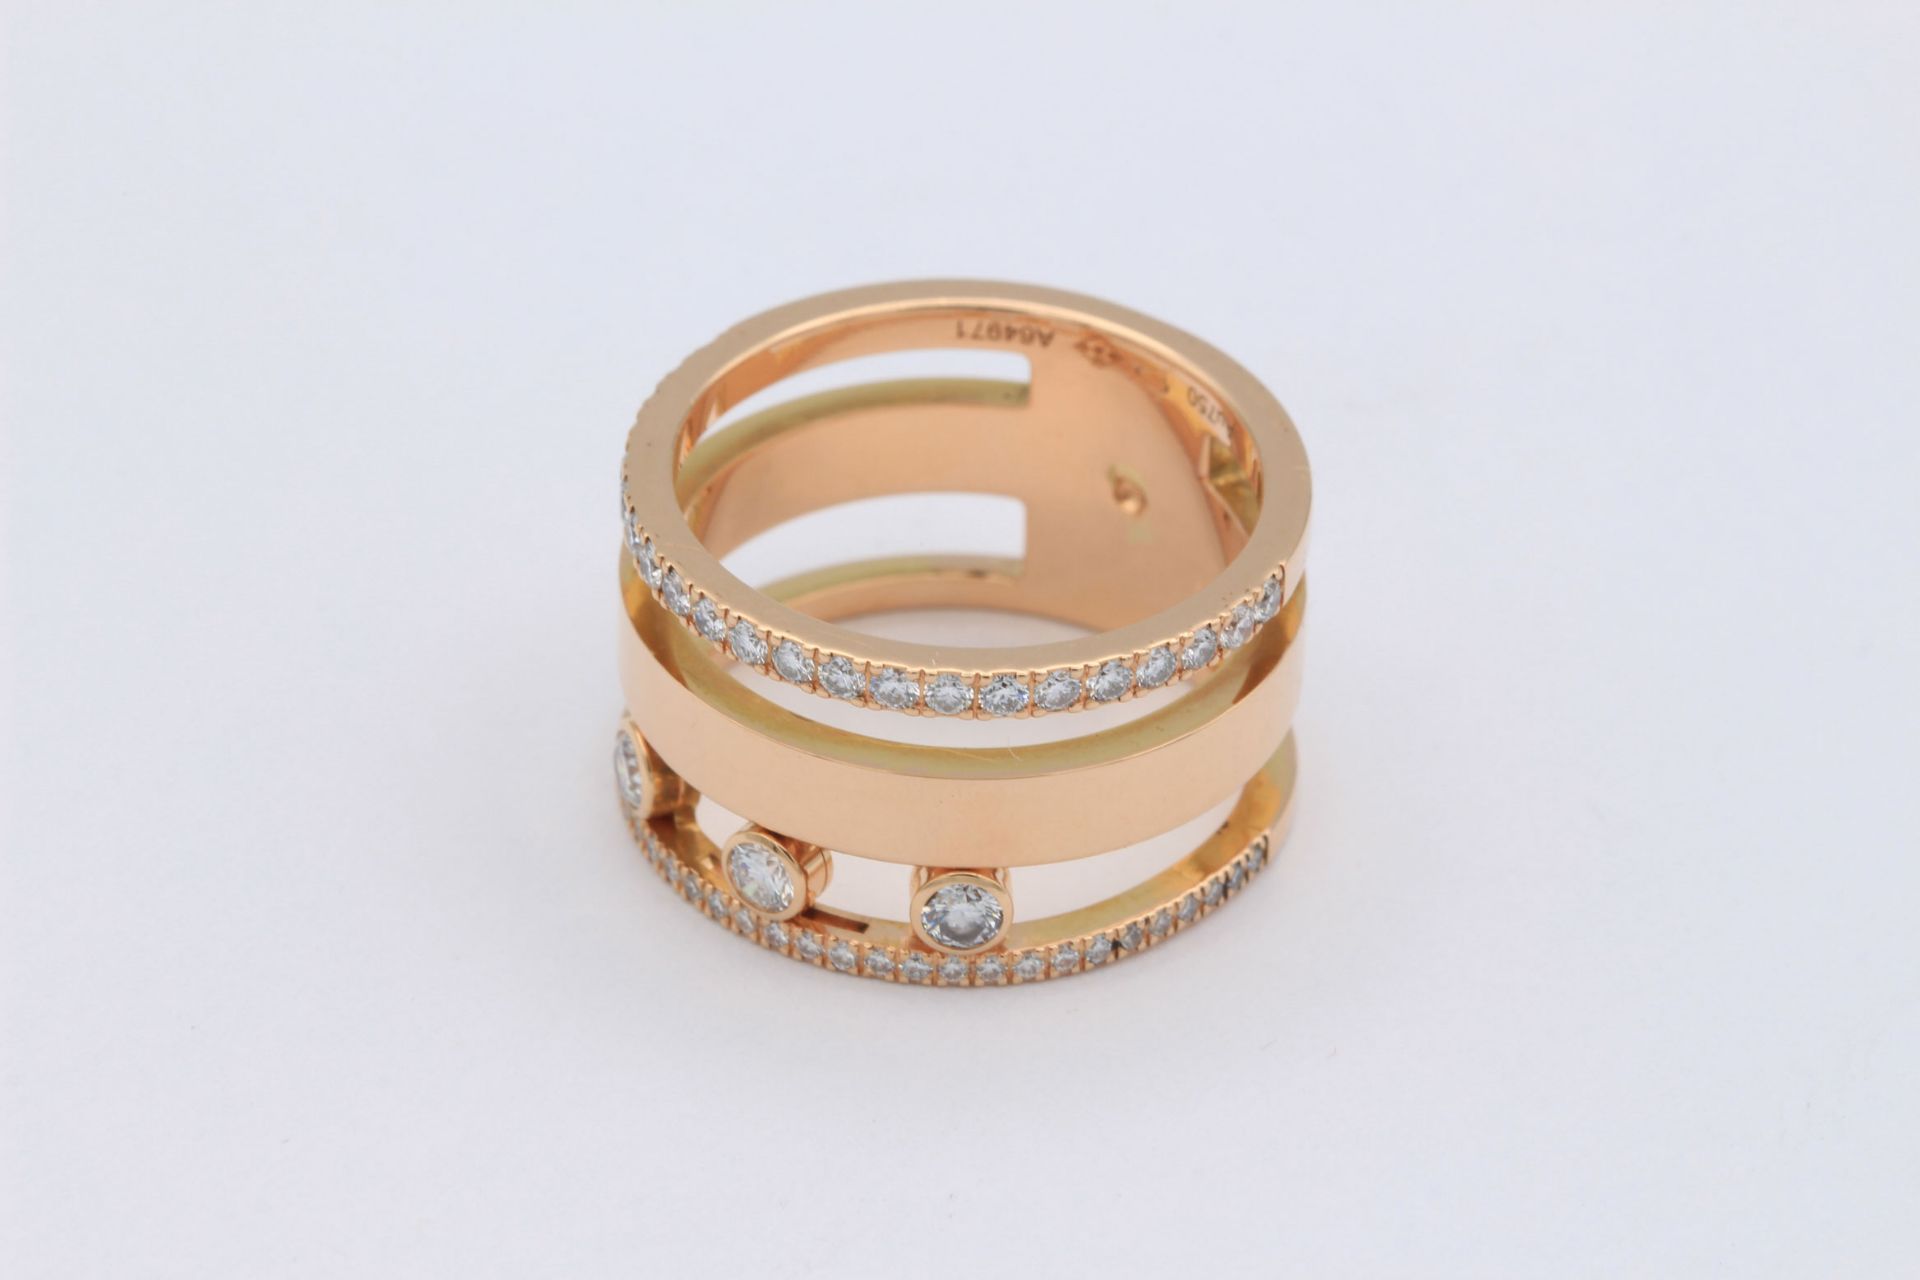 Large Romane model ring from Messika in 18K pink gold, set with 1.06K diamonds - Bild 3 aus 9